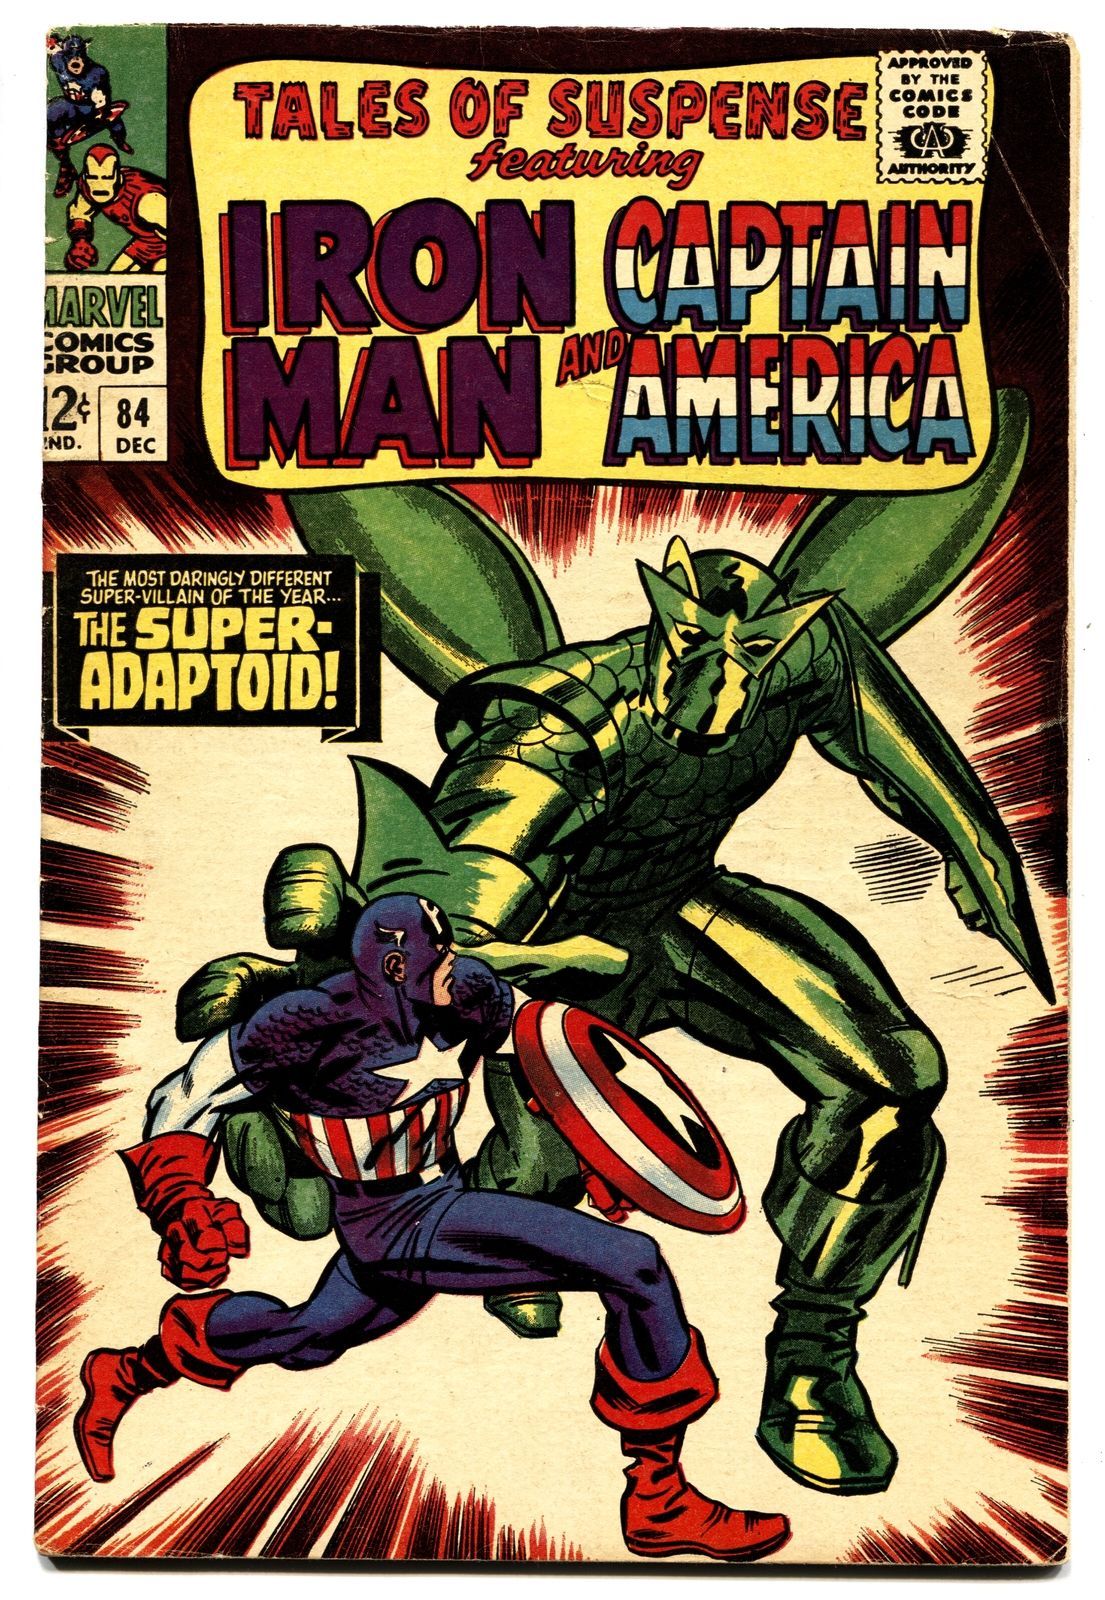 TALES OF SUSPENSE #84 comic book 1966-IRON MAN/CAPTAIN AMERICA-MARVEL-FN - $44.14